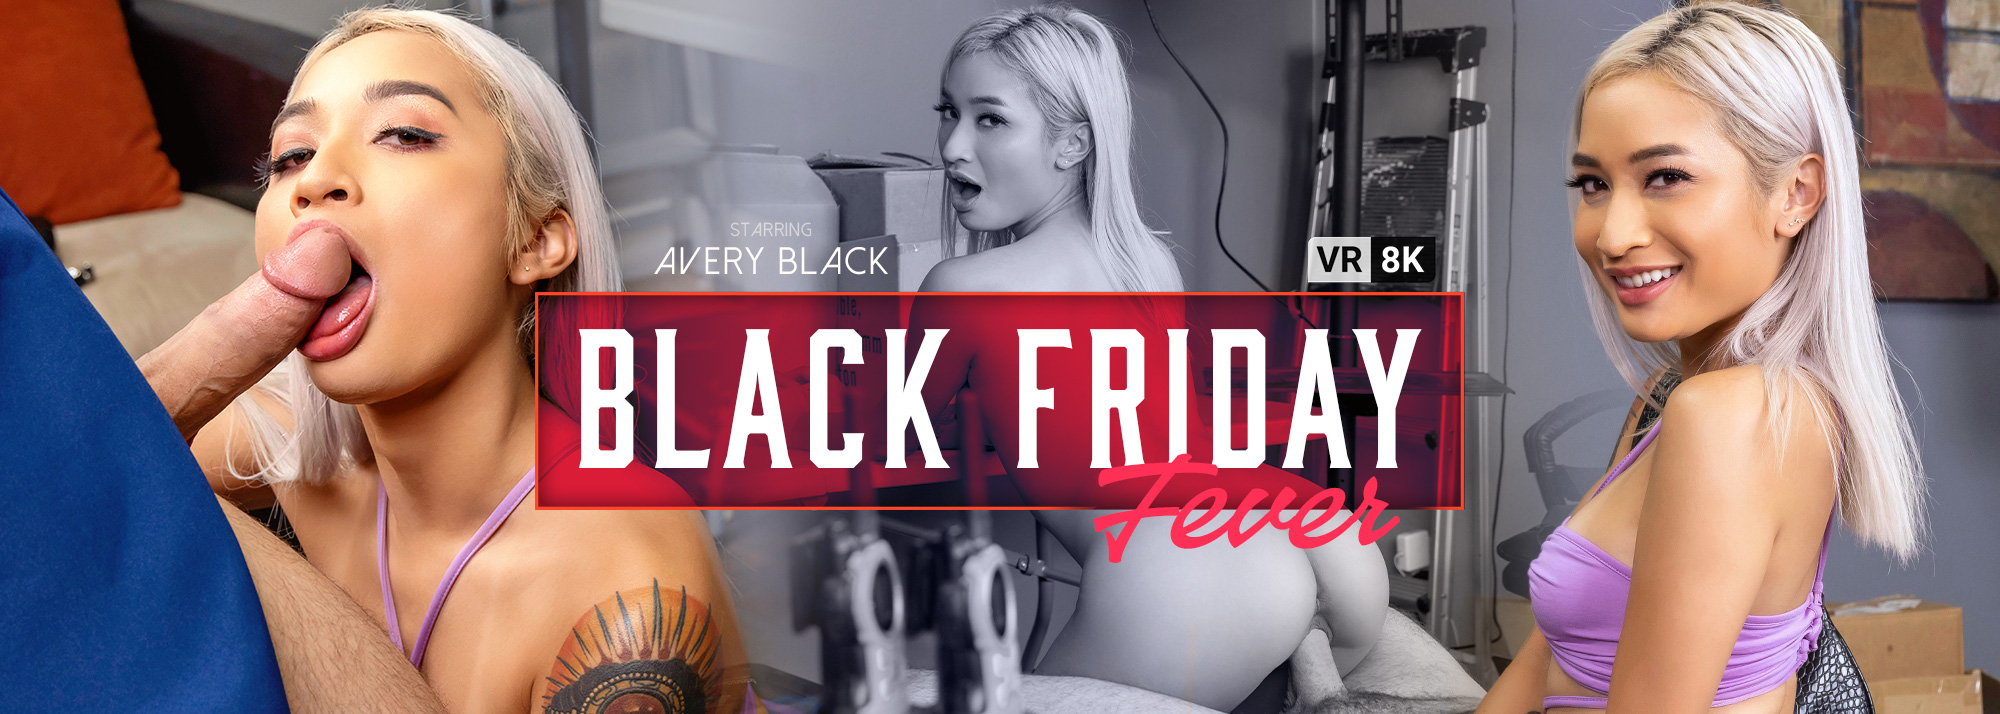 Black Friday Fever with Avery Black  Slideshow